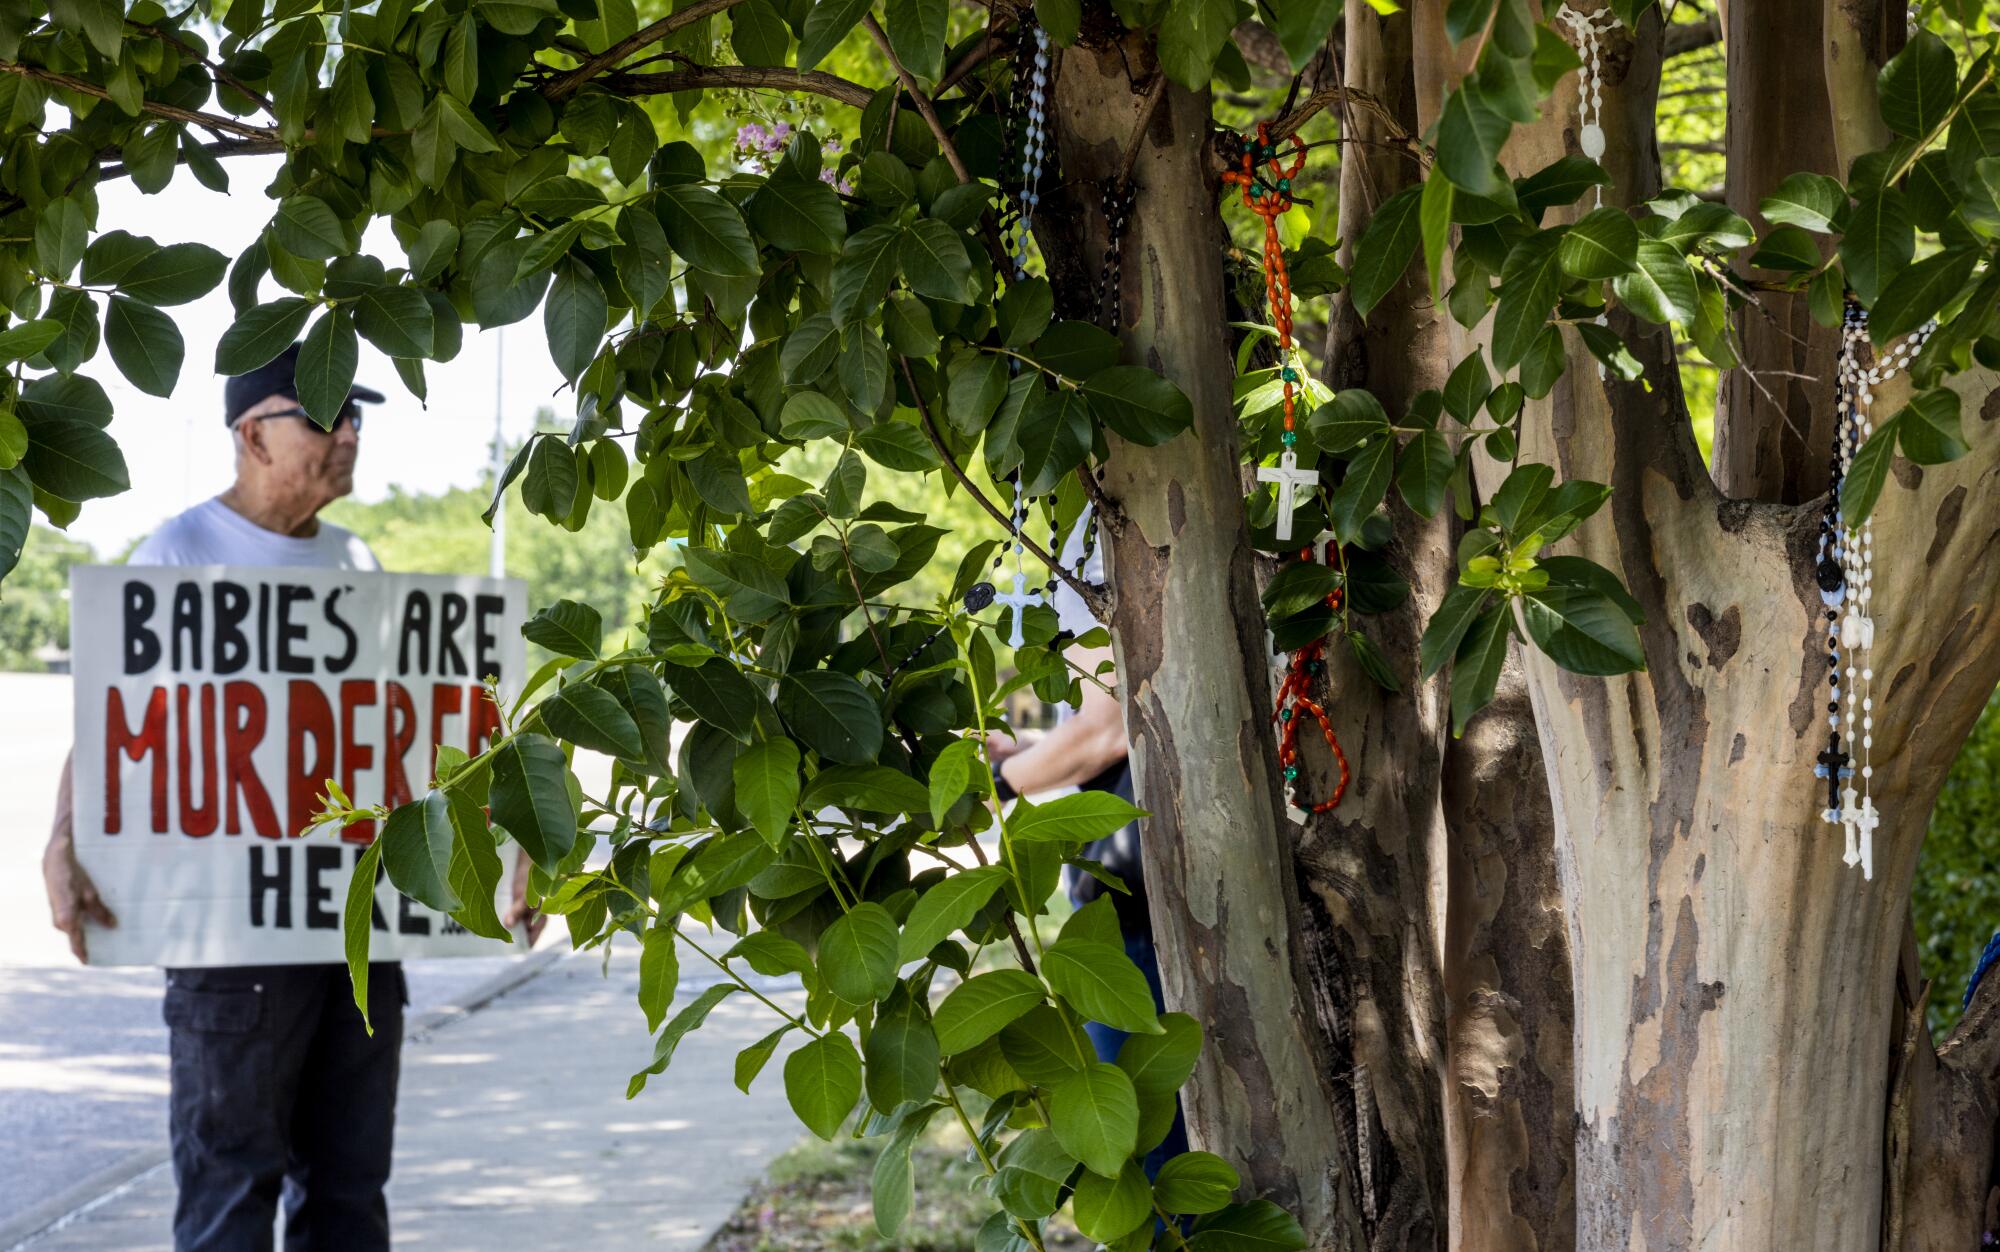 A man holding a sign near a tree